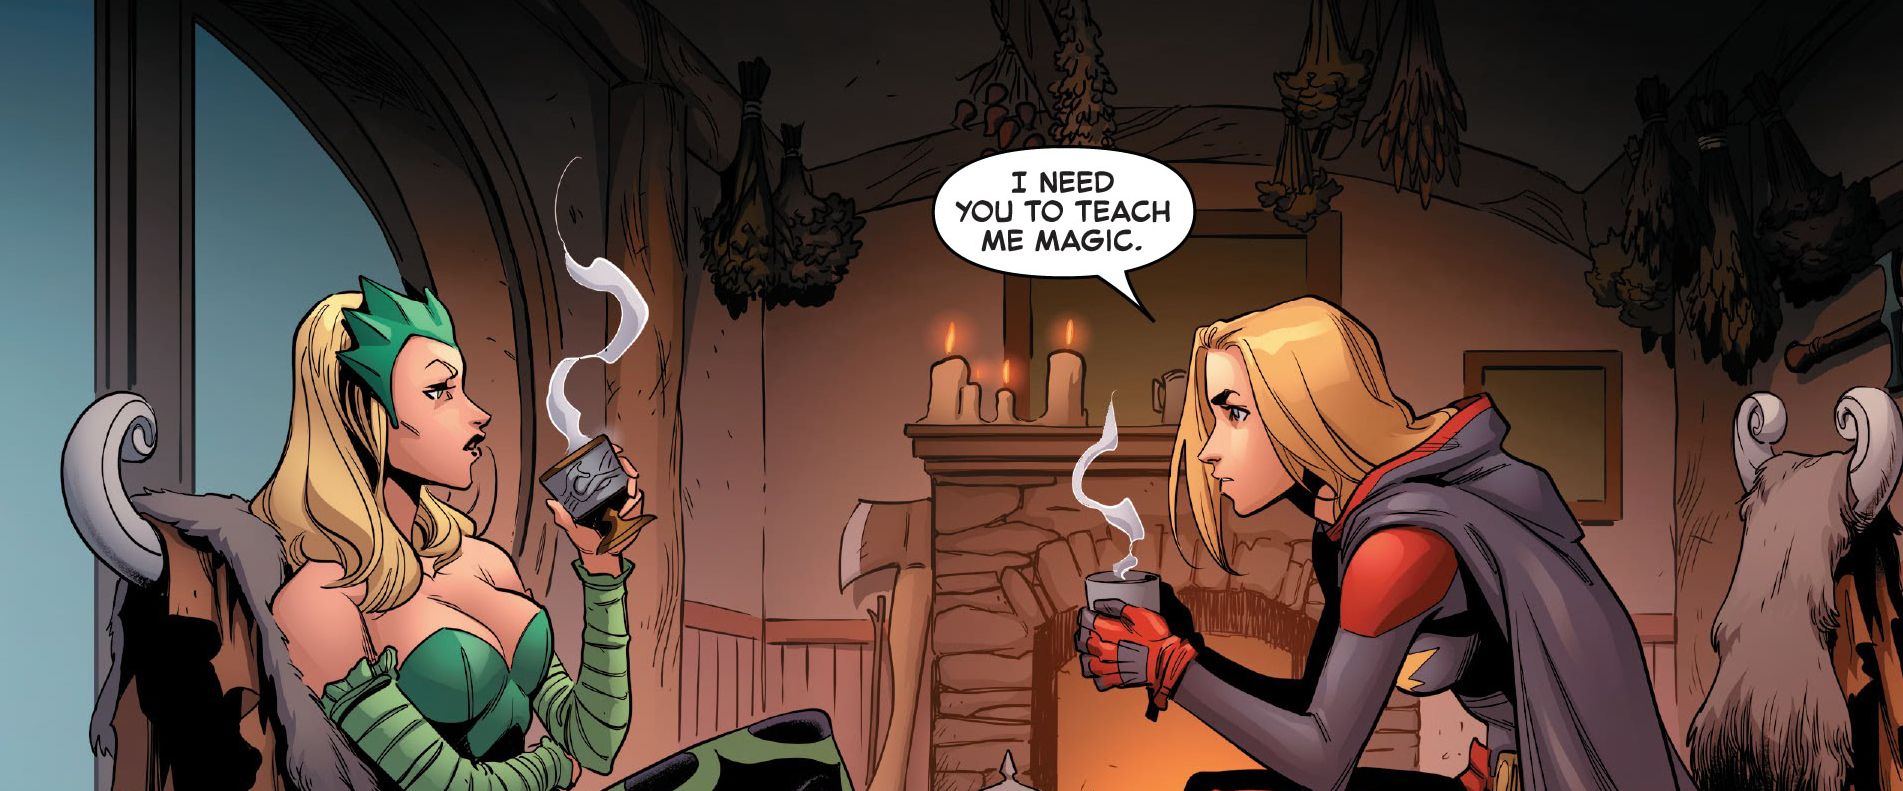 Captain Marvel asks Enchantress to teach her magic